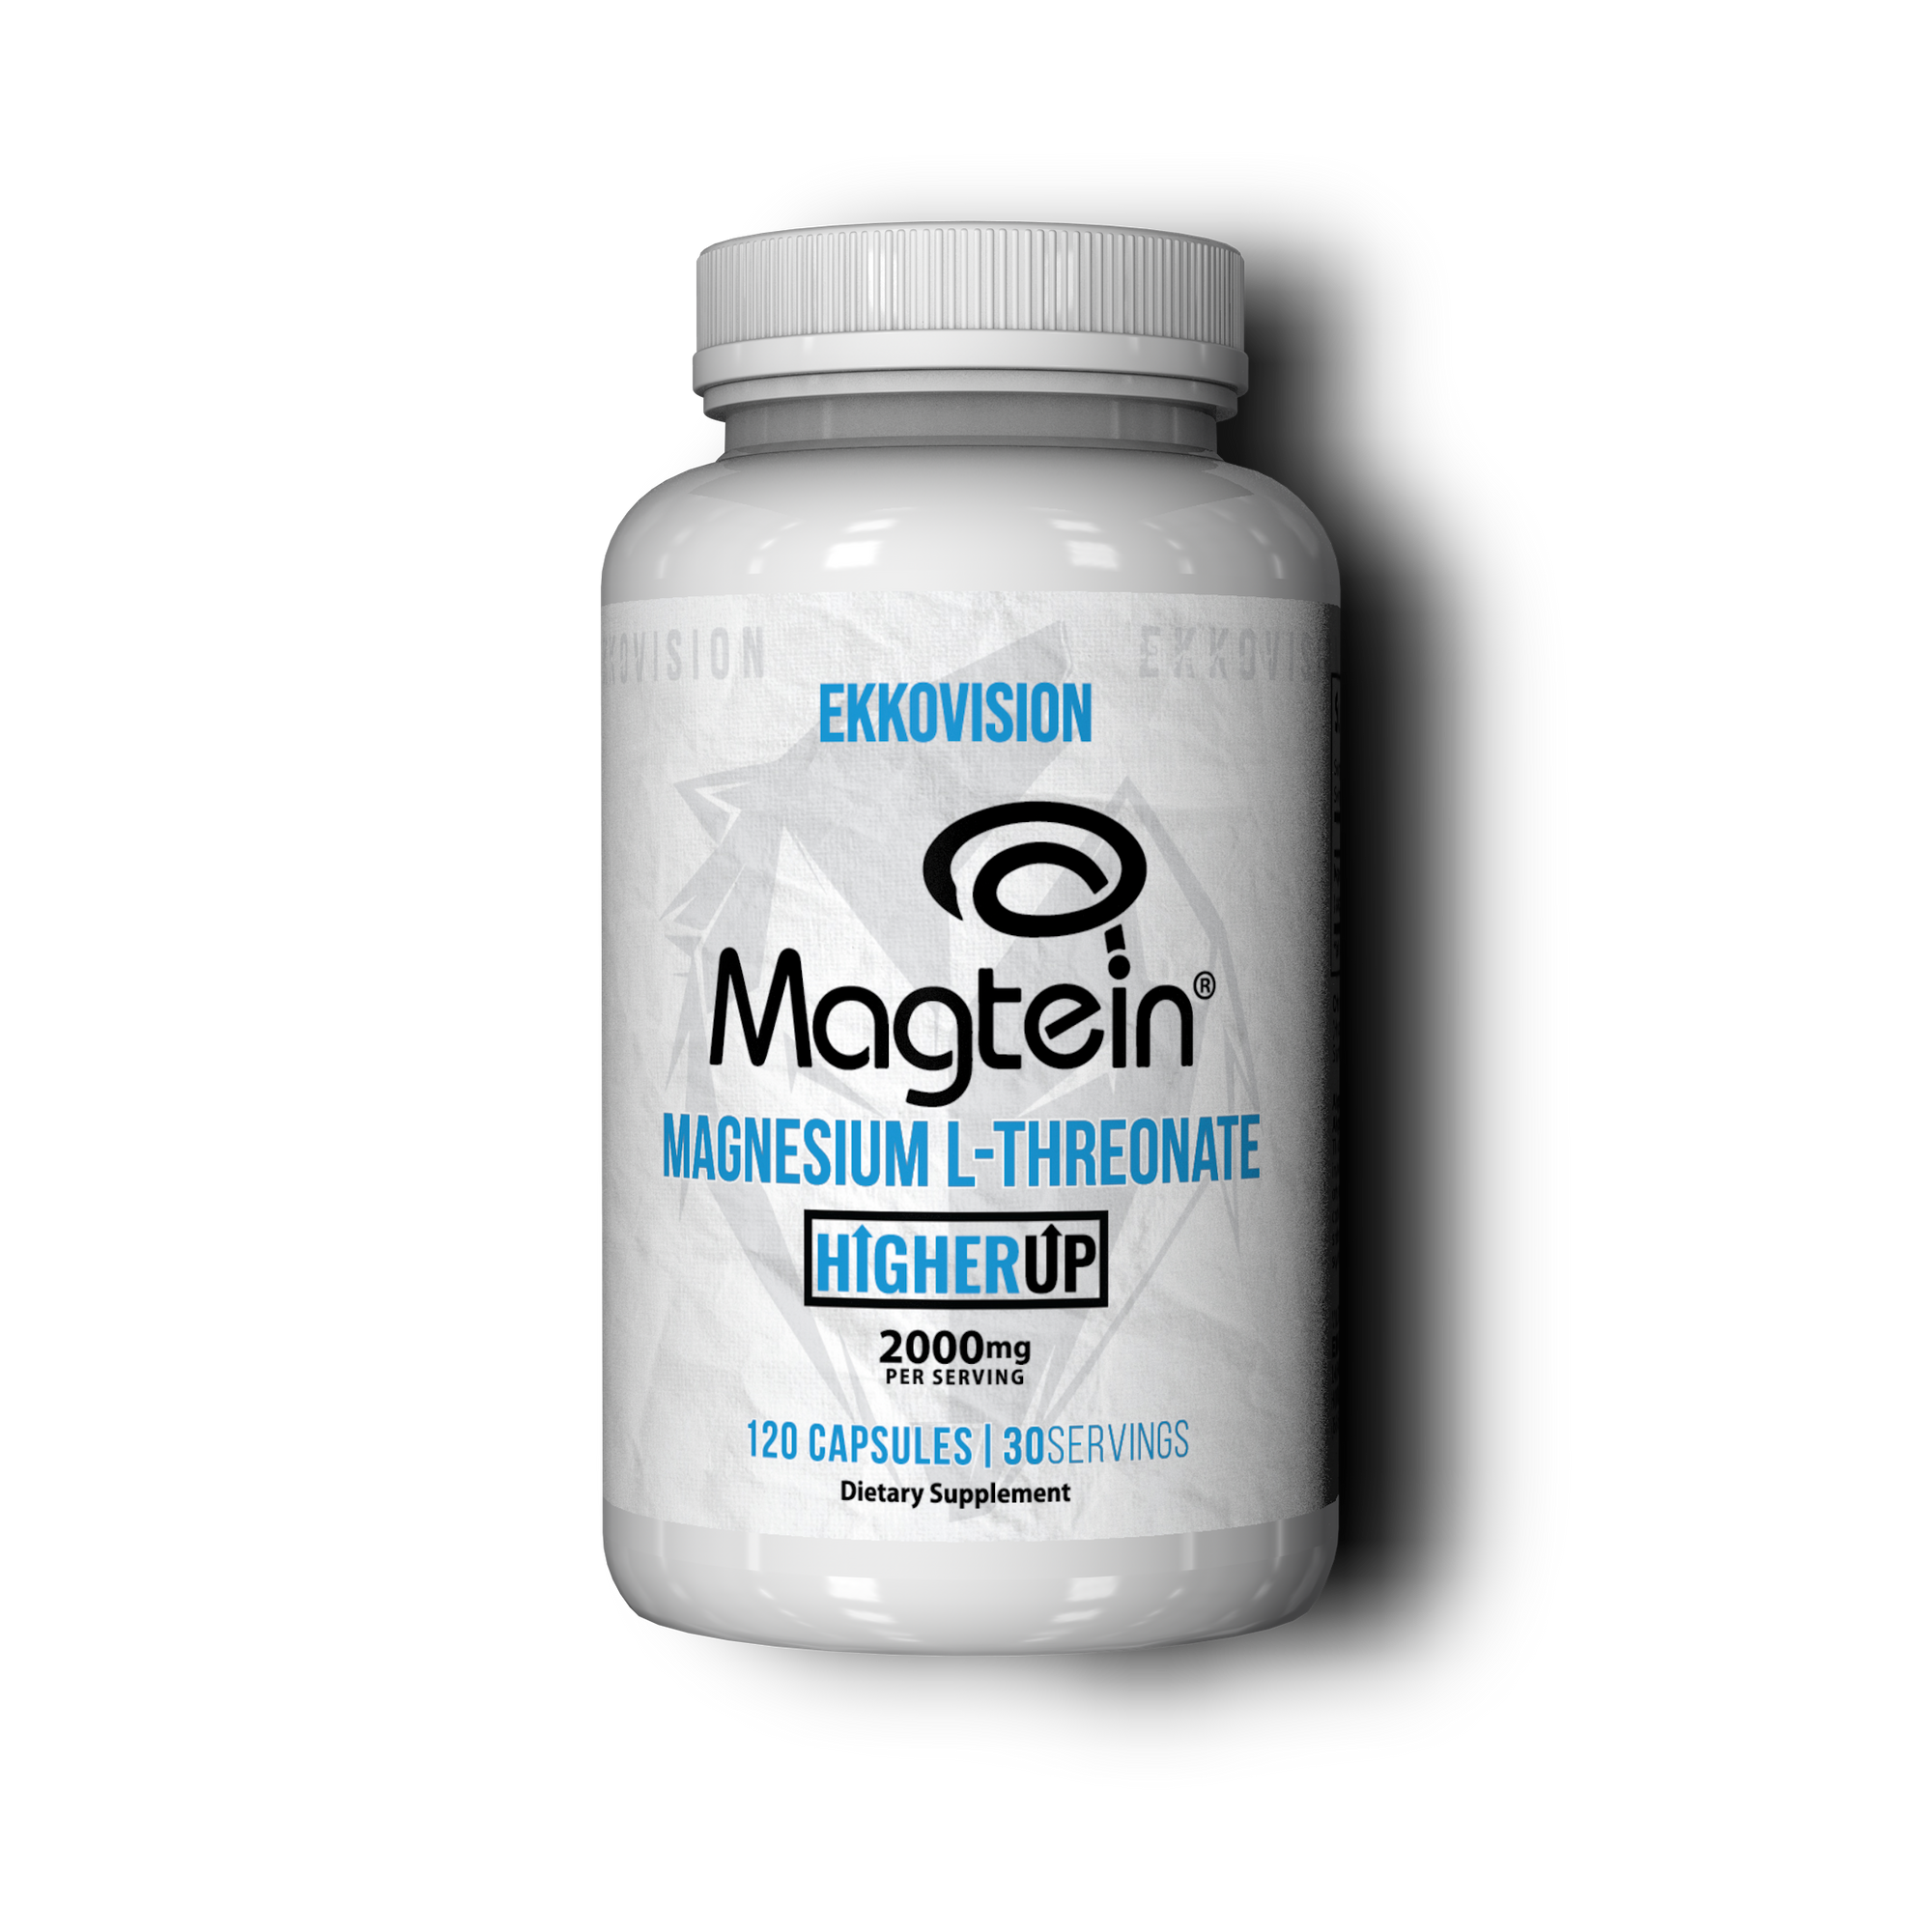 Ekko MAGTEIN Magnesium L-Threonate 3rd Party Tested